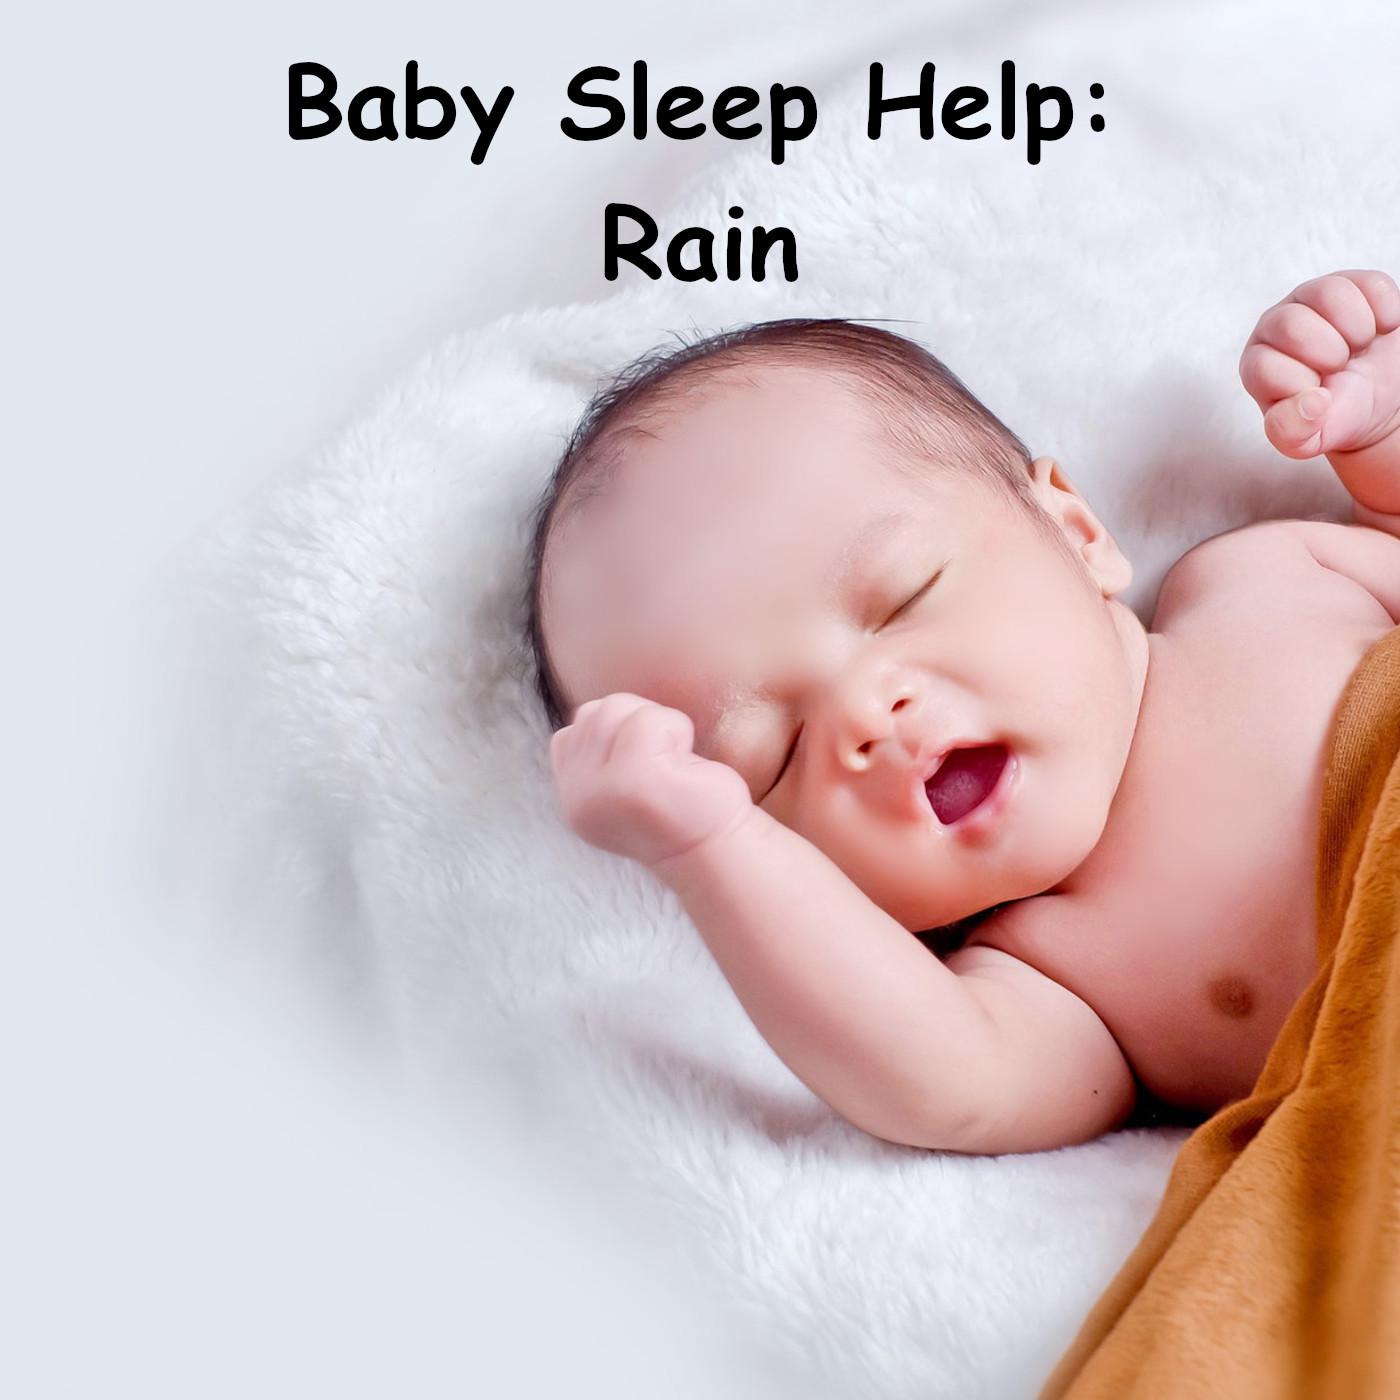 Baby Sleep Help: Rain